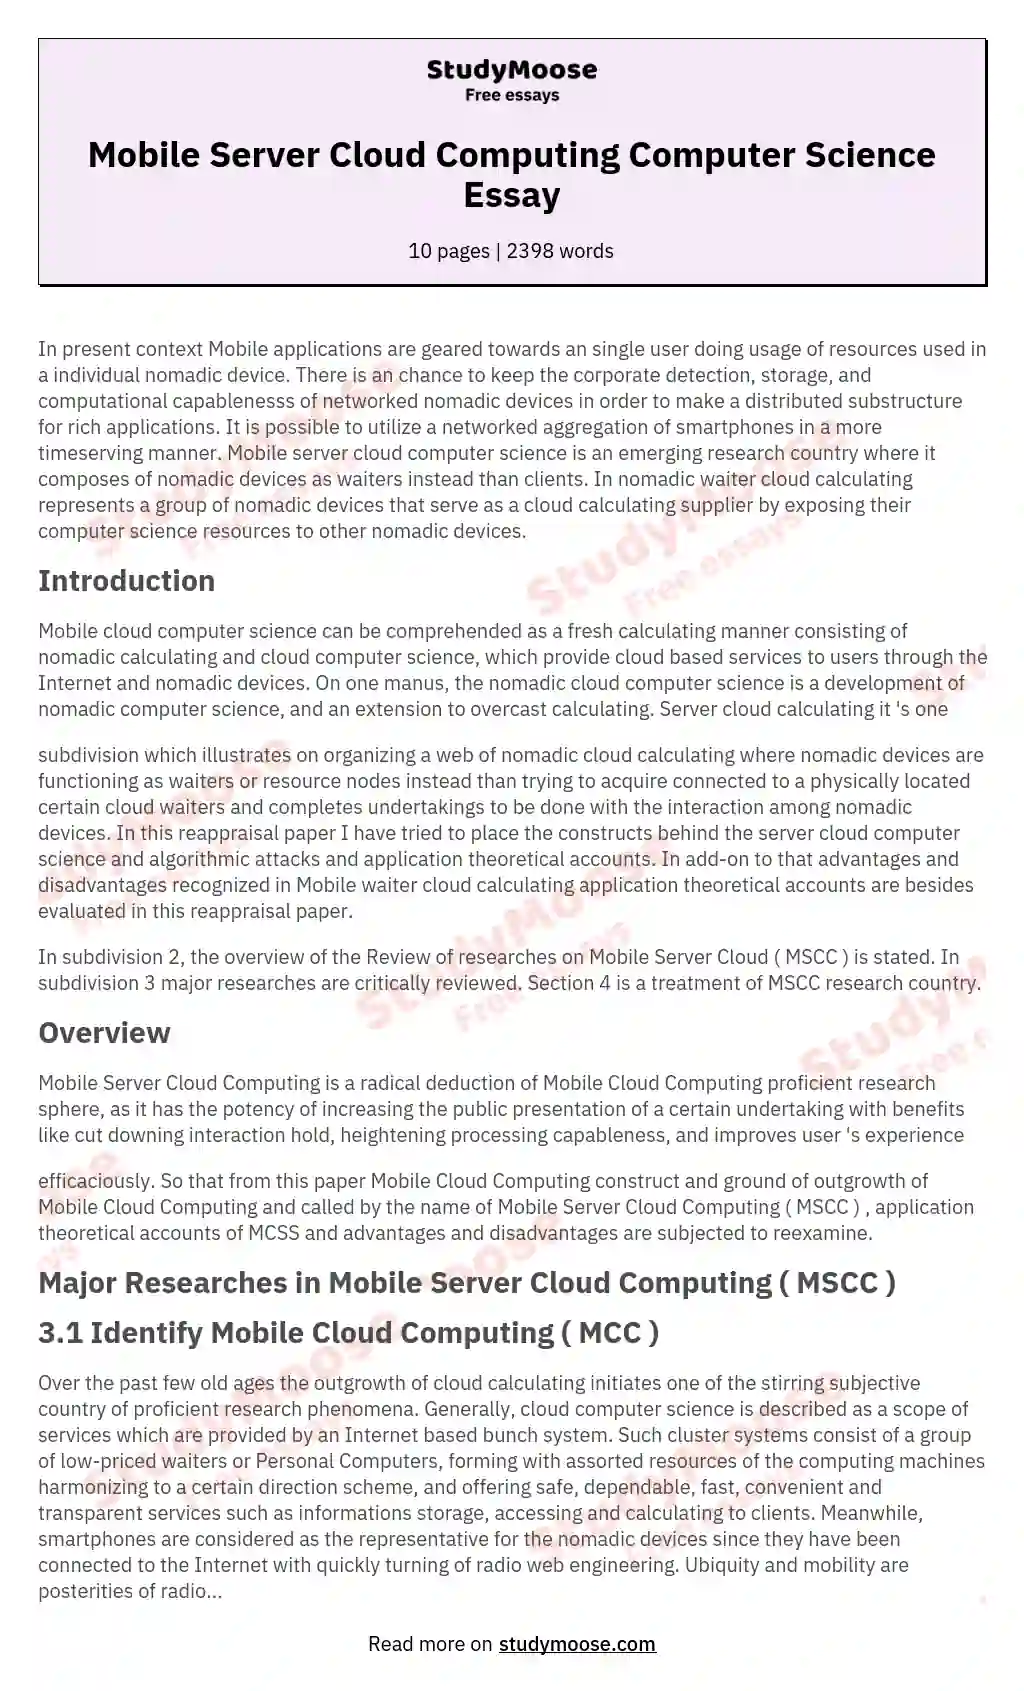 Mobile Server Cloud Computing Computer Science Essay essay